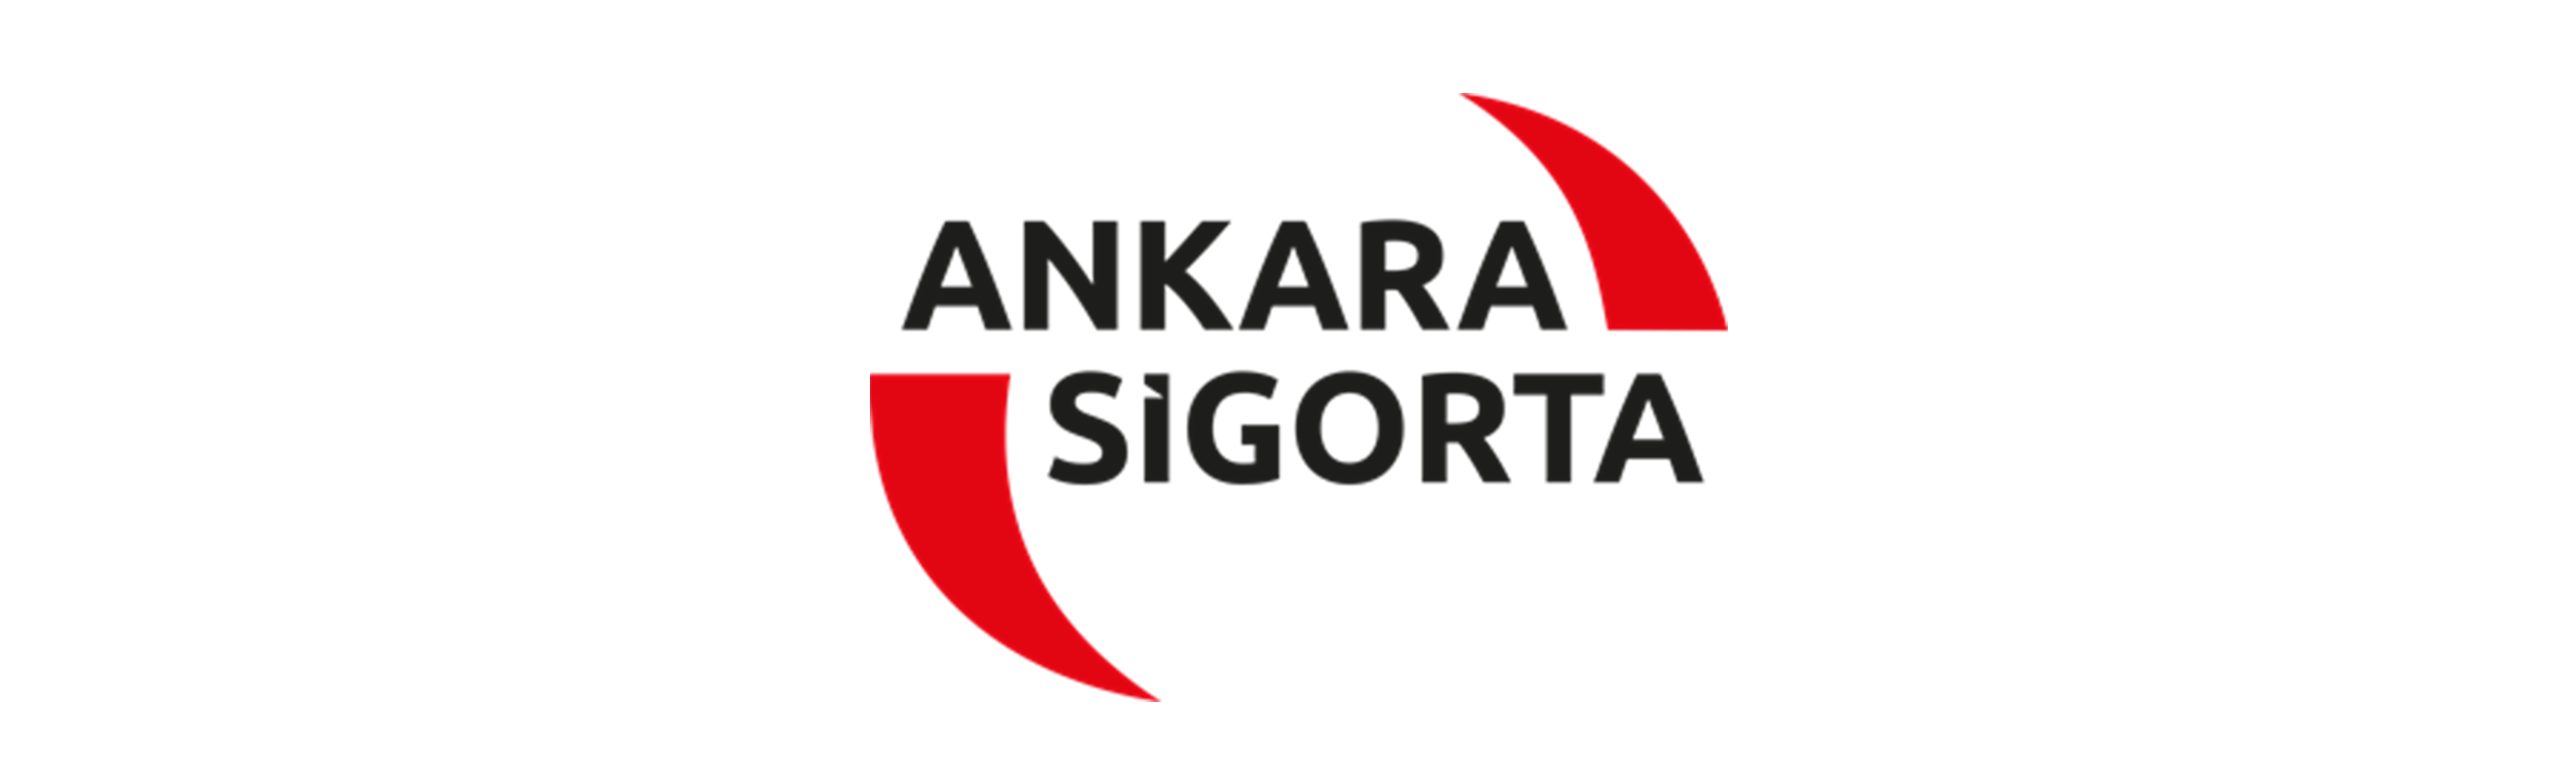 Anlaşmalı Sigortalar_0009_ankara-sigorta-yeni-logo-7B1EEF0F60-seeklogo.com